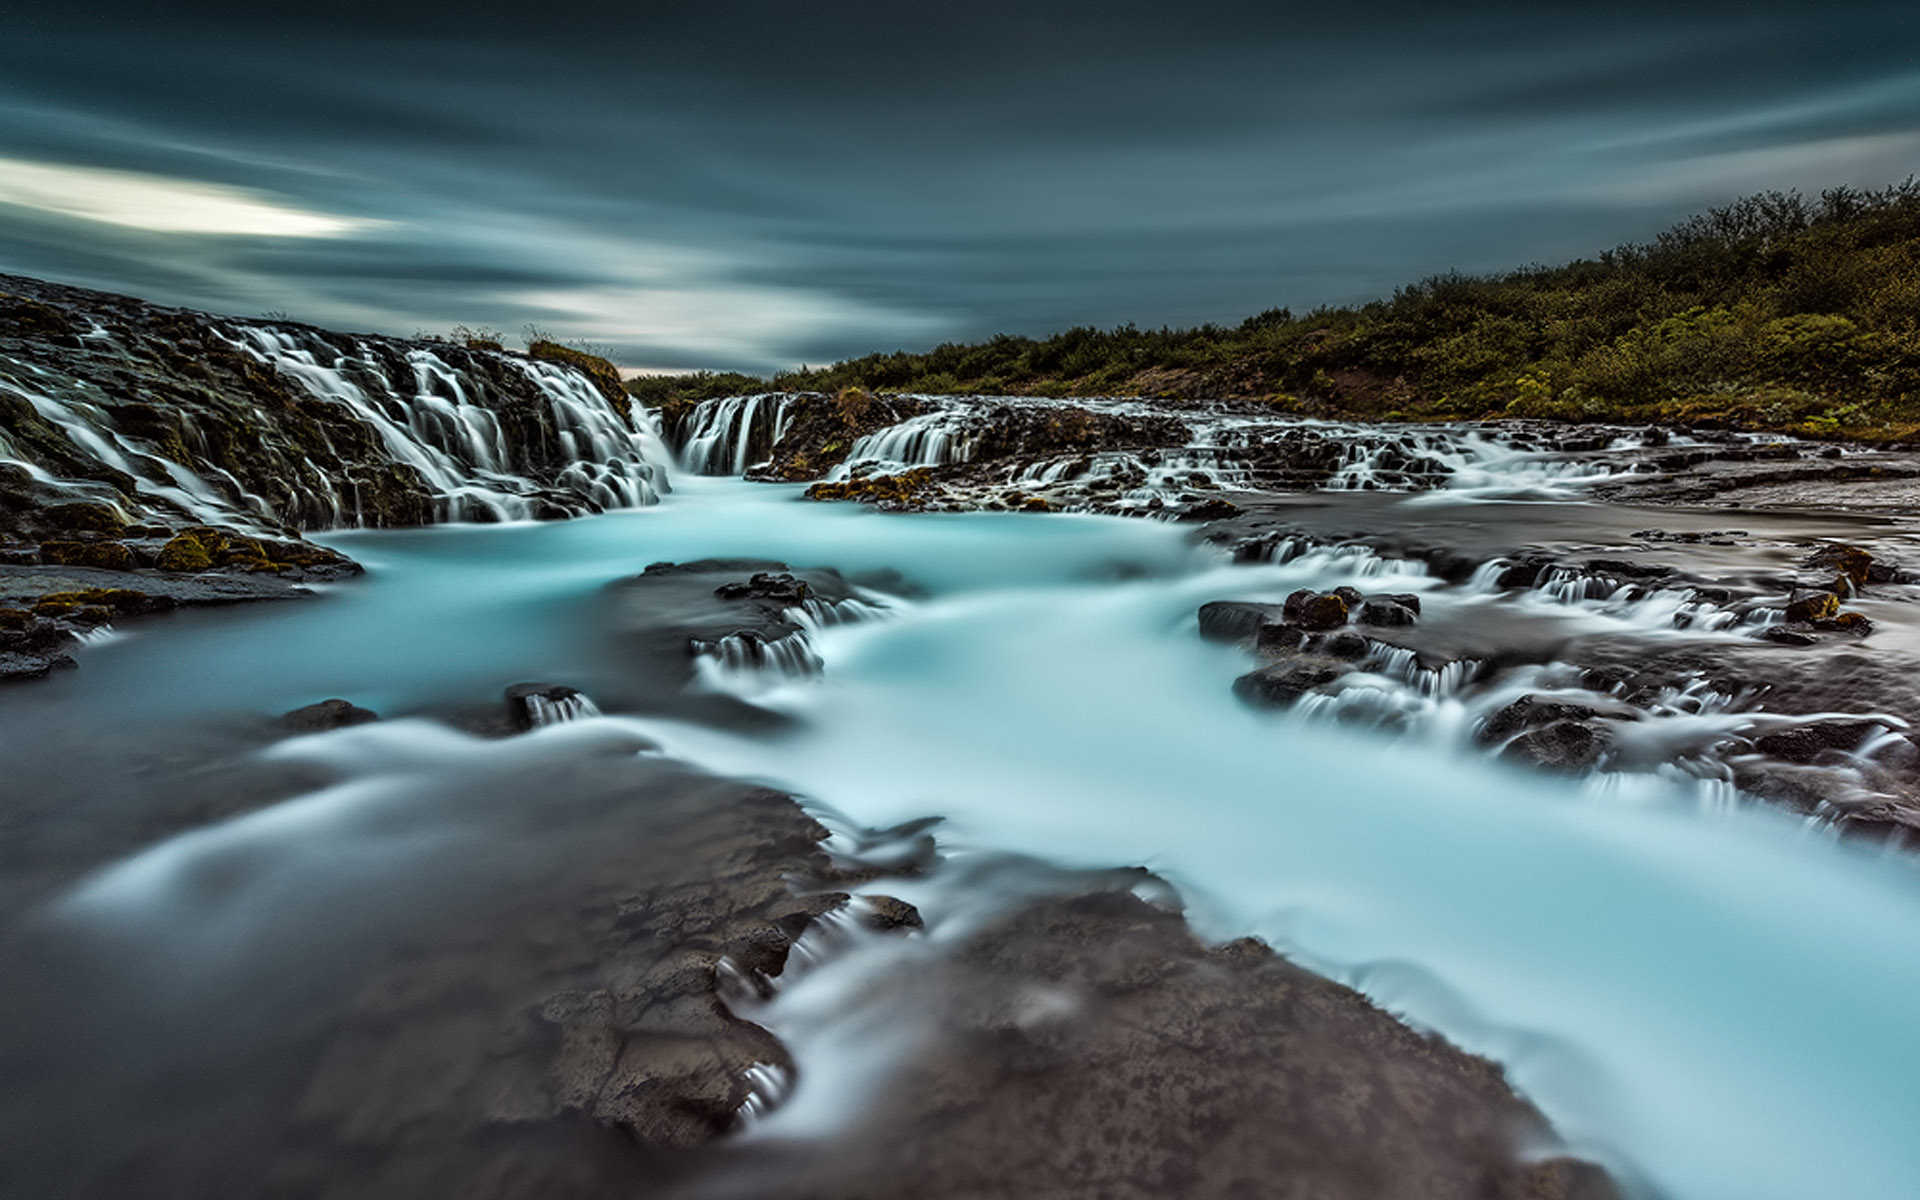 Beautiful Waterfall With Blue Water Iceland Desktop ...